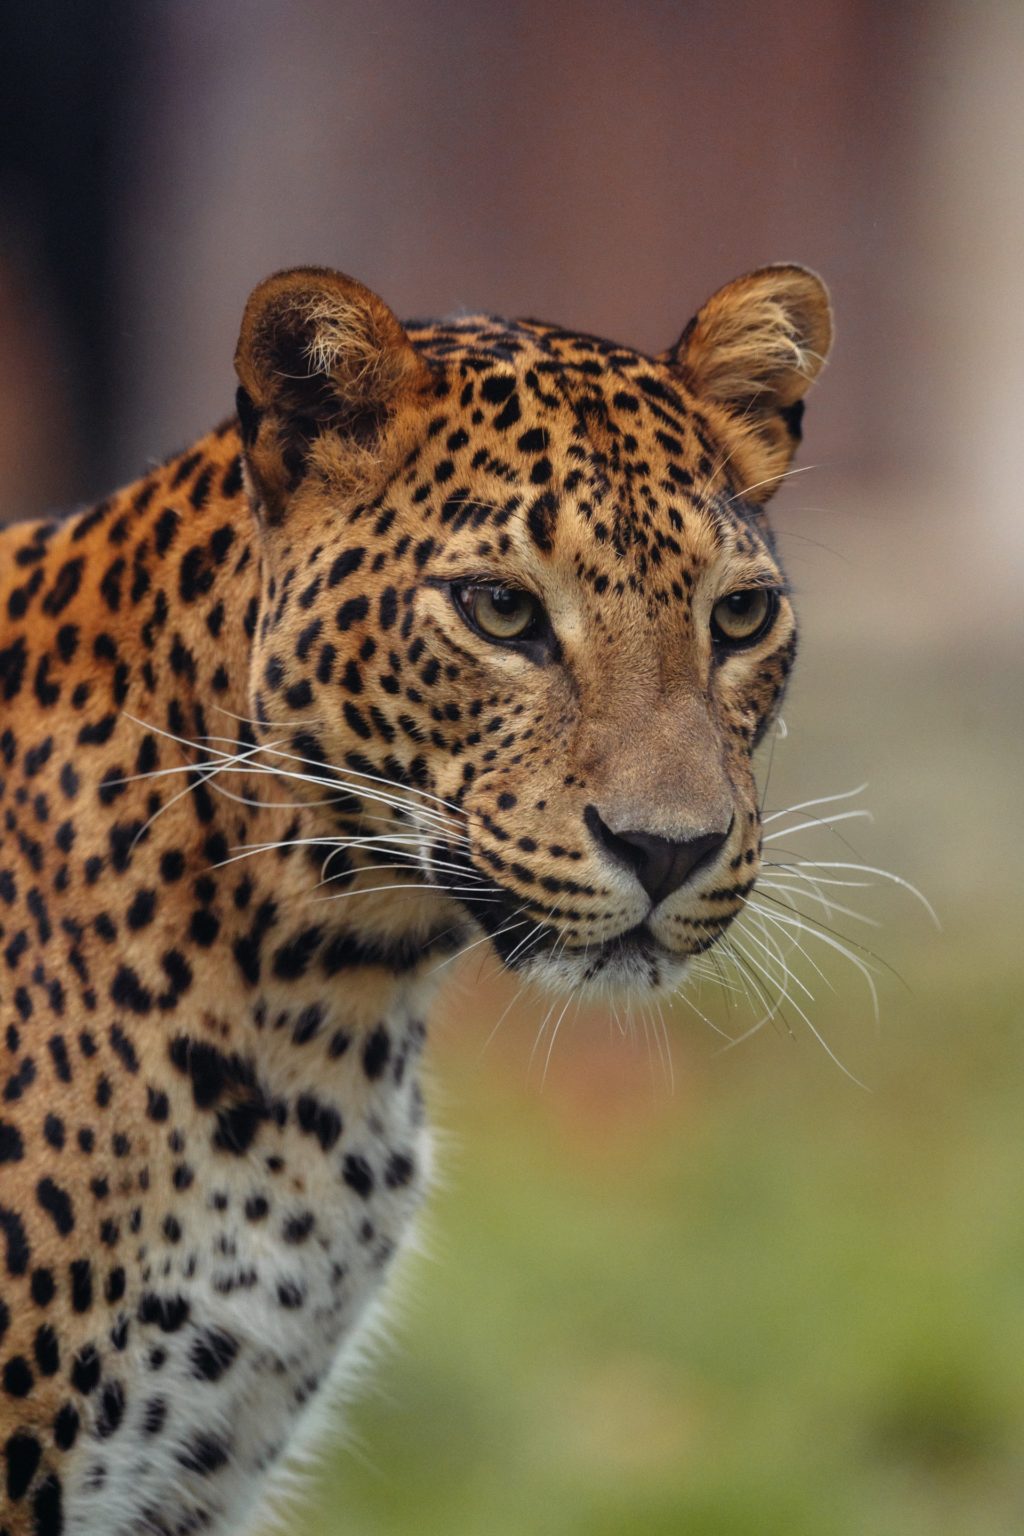 leopard wildlife portrait photos